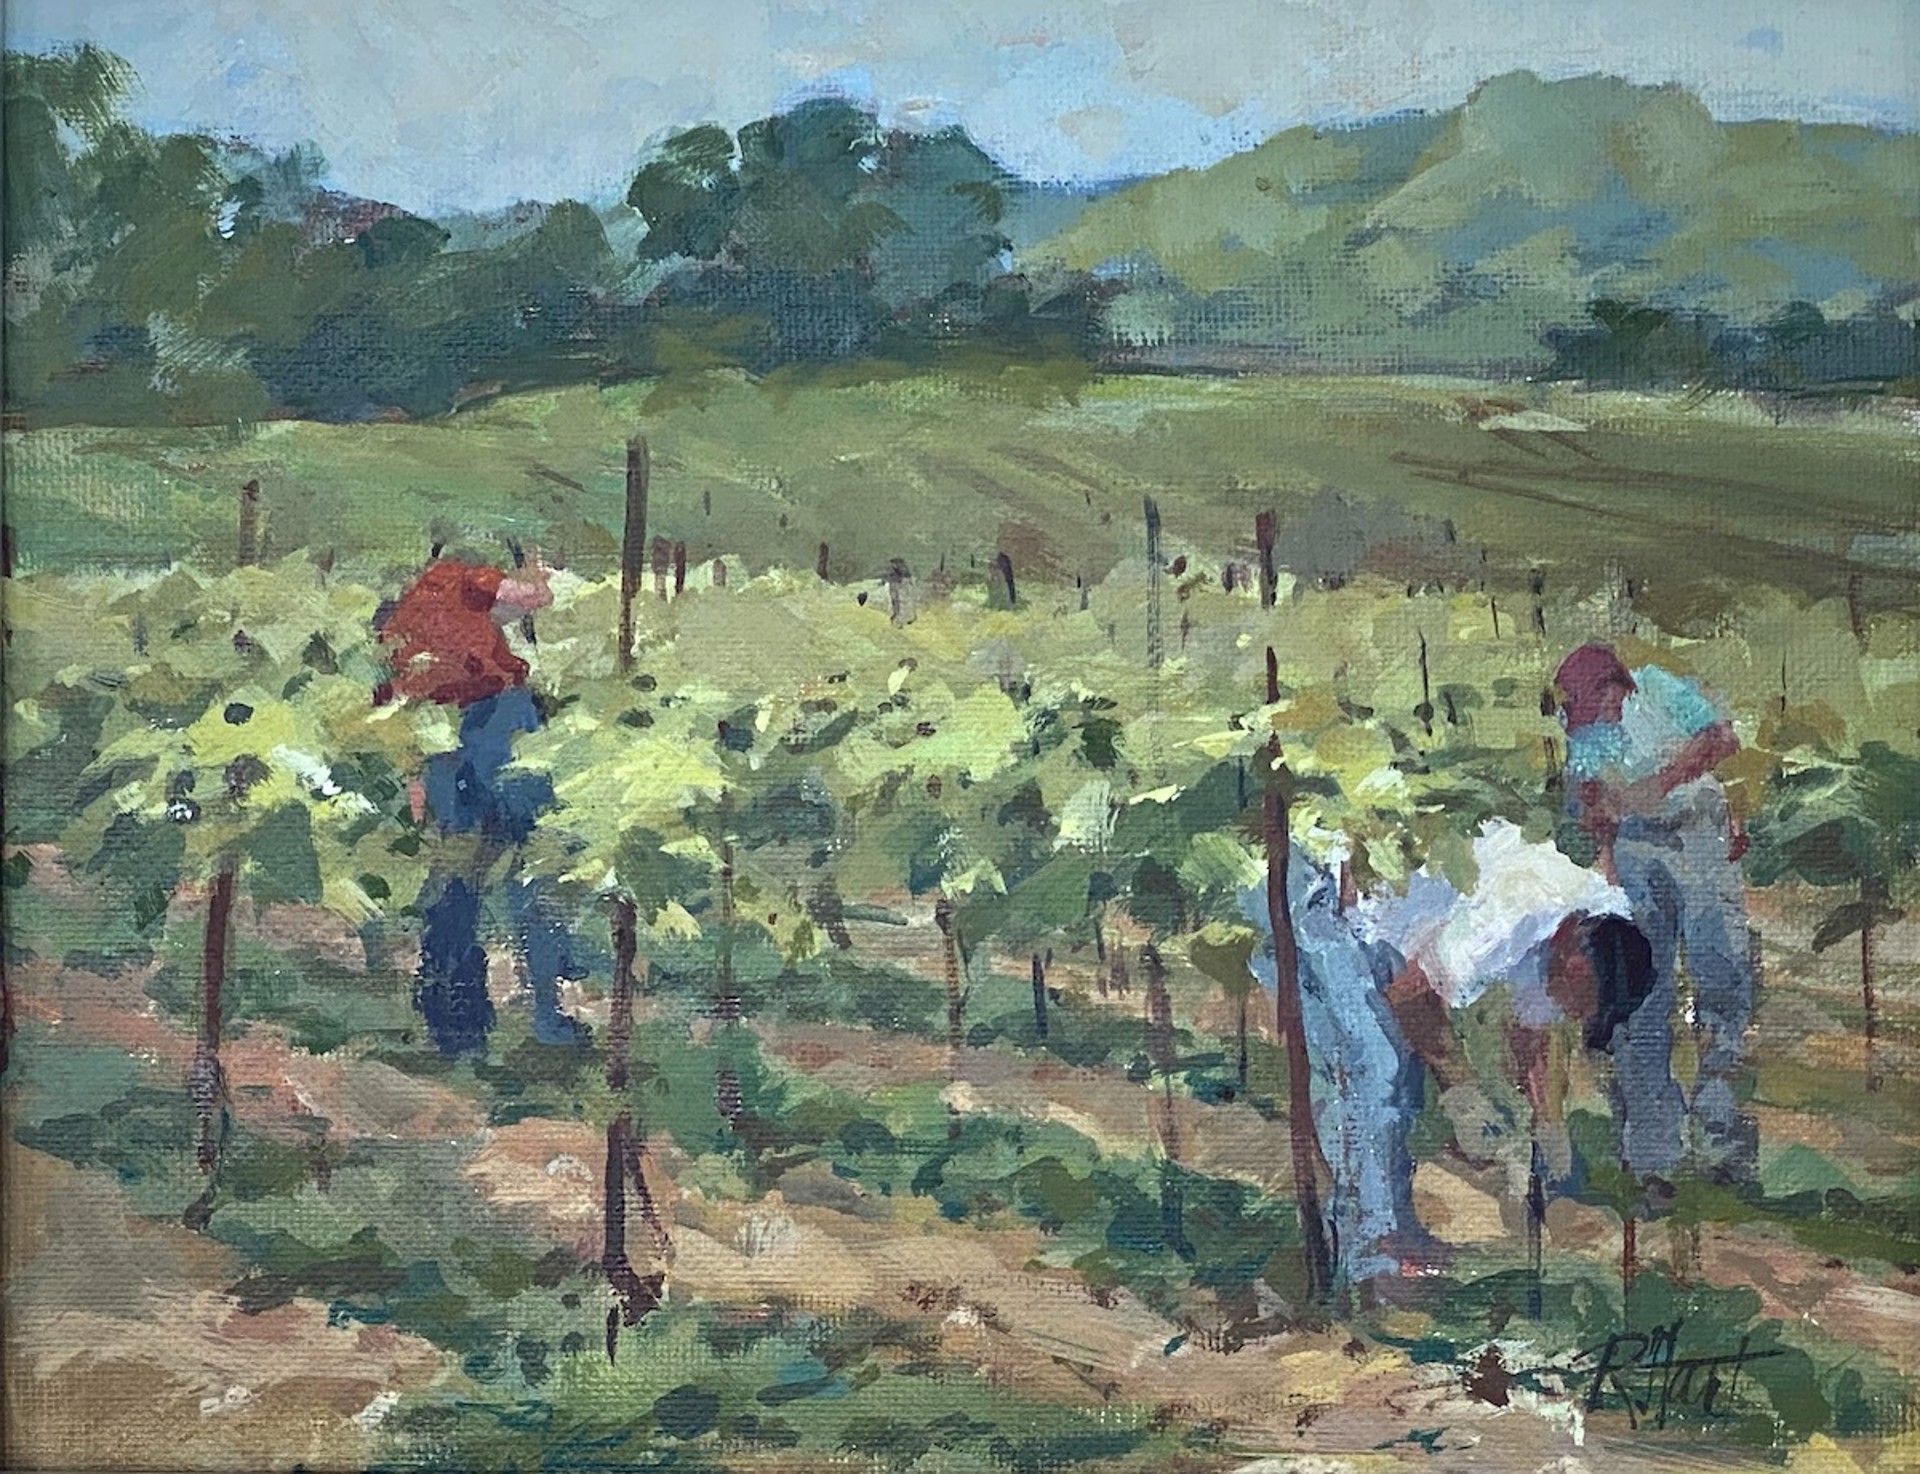 Tending the Vines by Roianne Hart